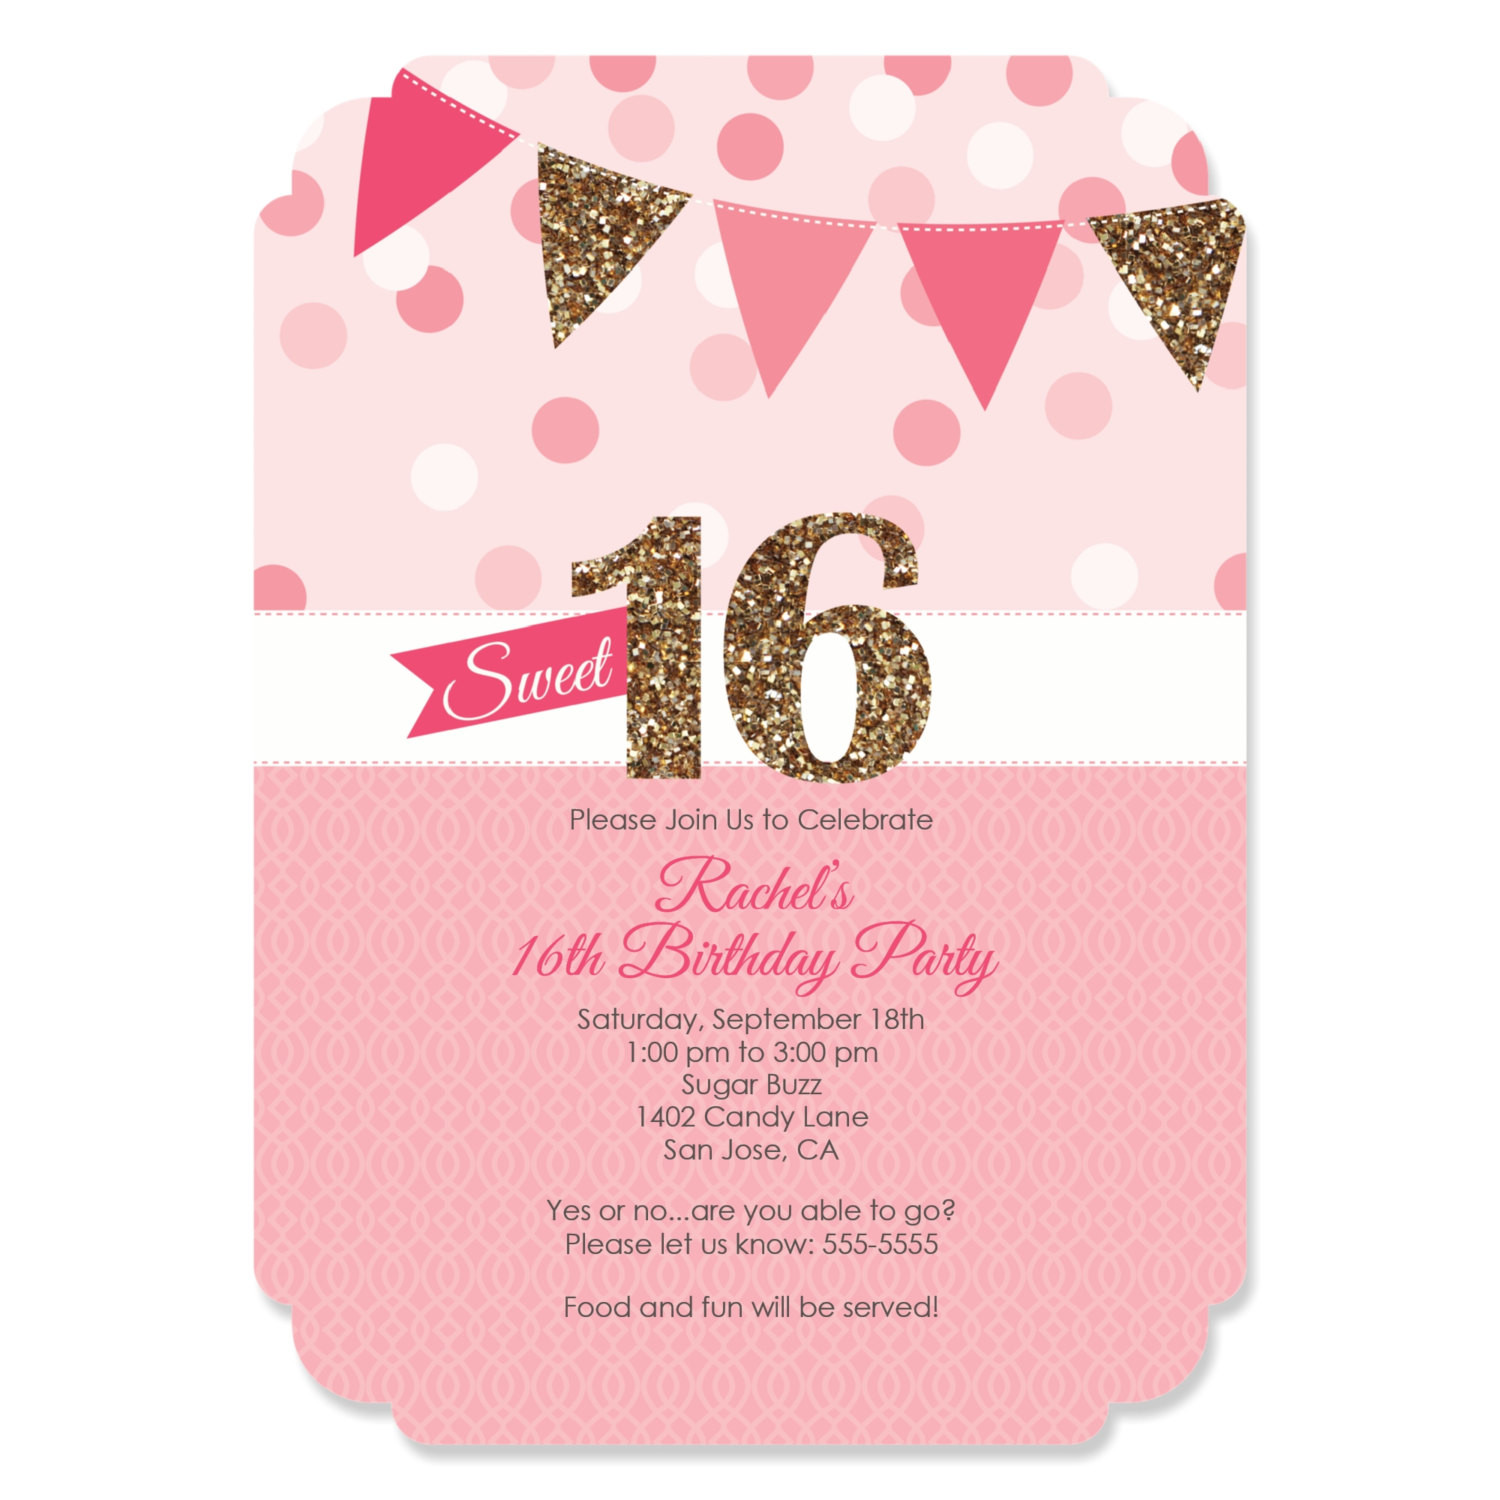 Sweet 16 Birthday Party Invitations
 Sweet 16 Birthday Invitations Personalized Birthday Party